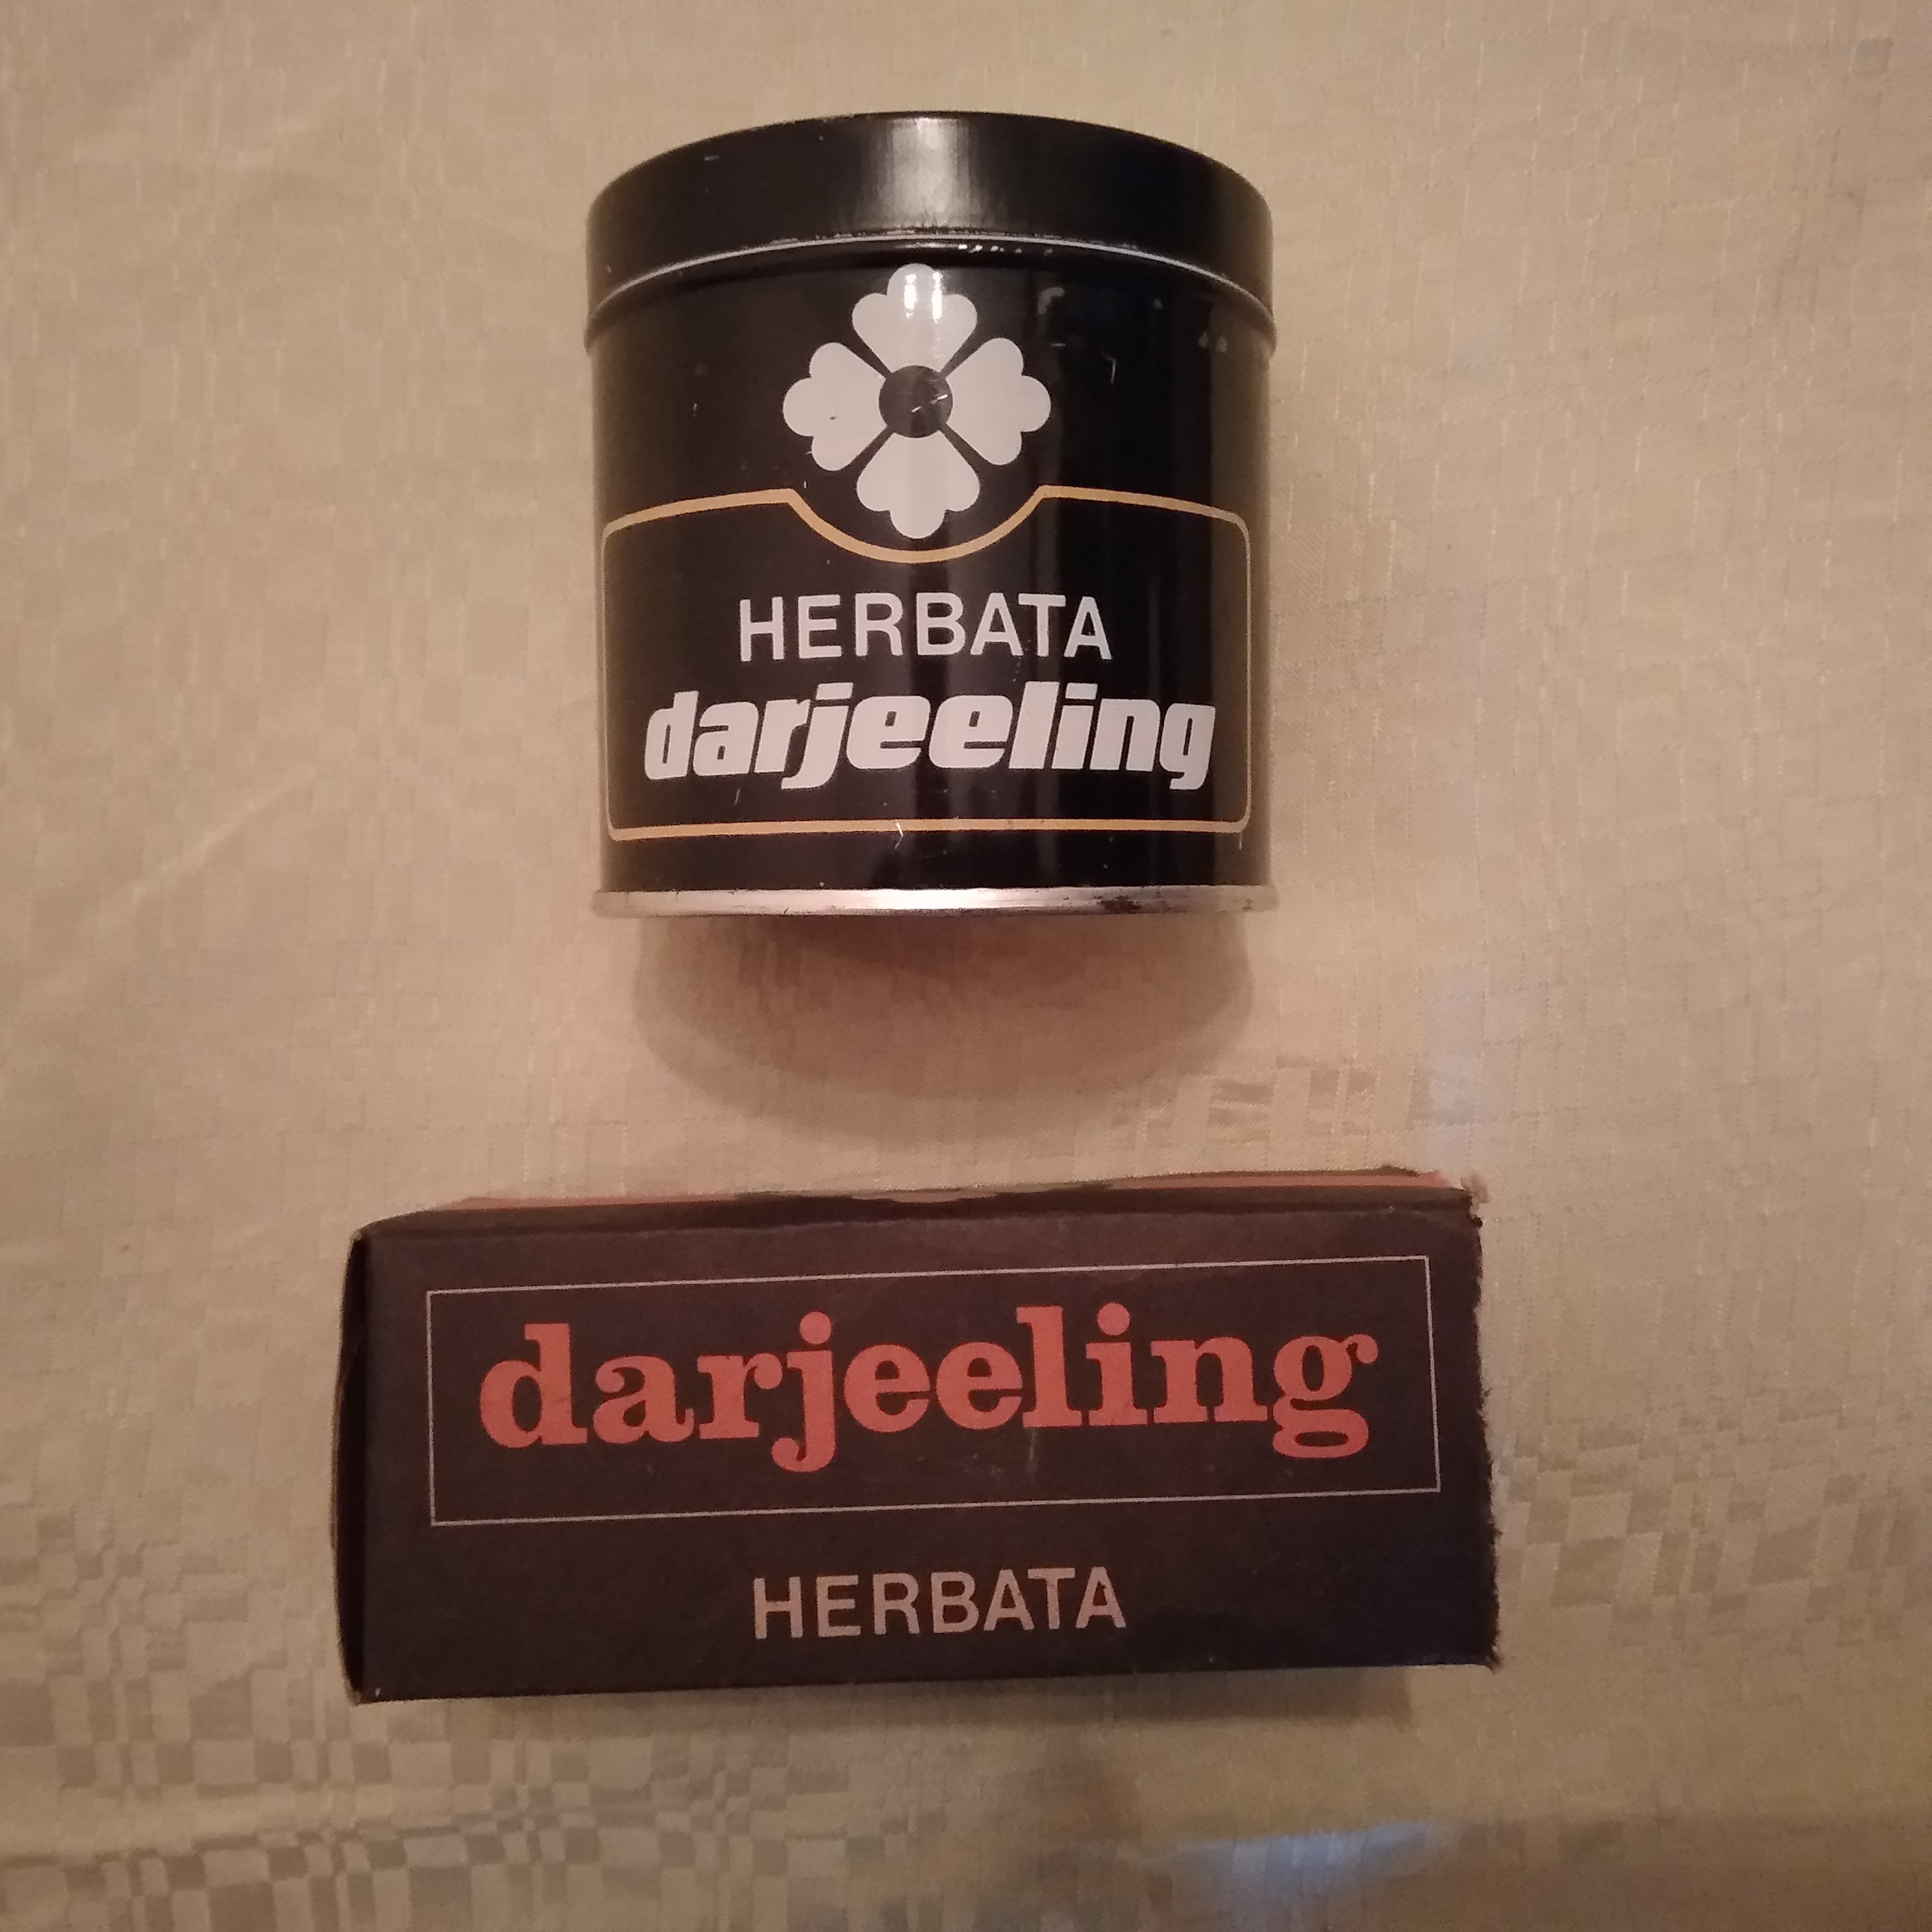 herbata darjeeling 1.jpg